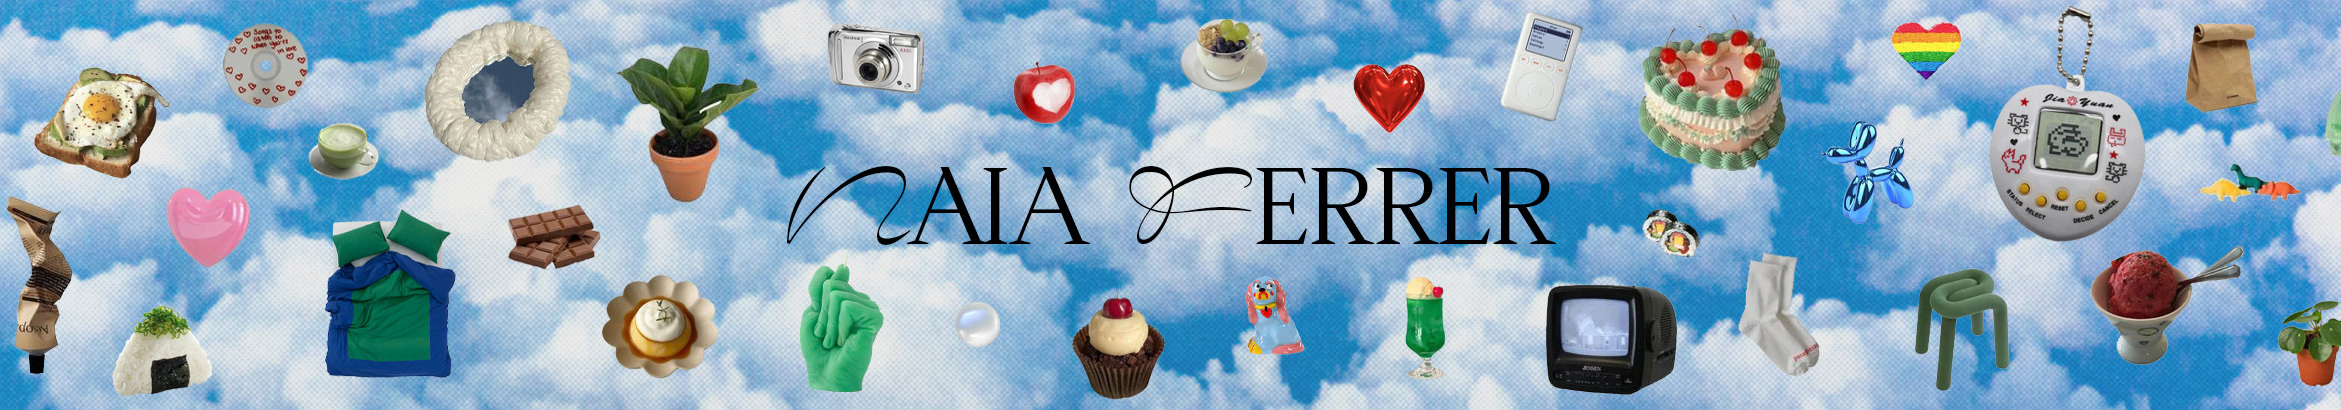 Profil-Banner von Naia Ferrer